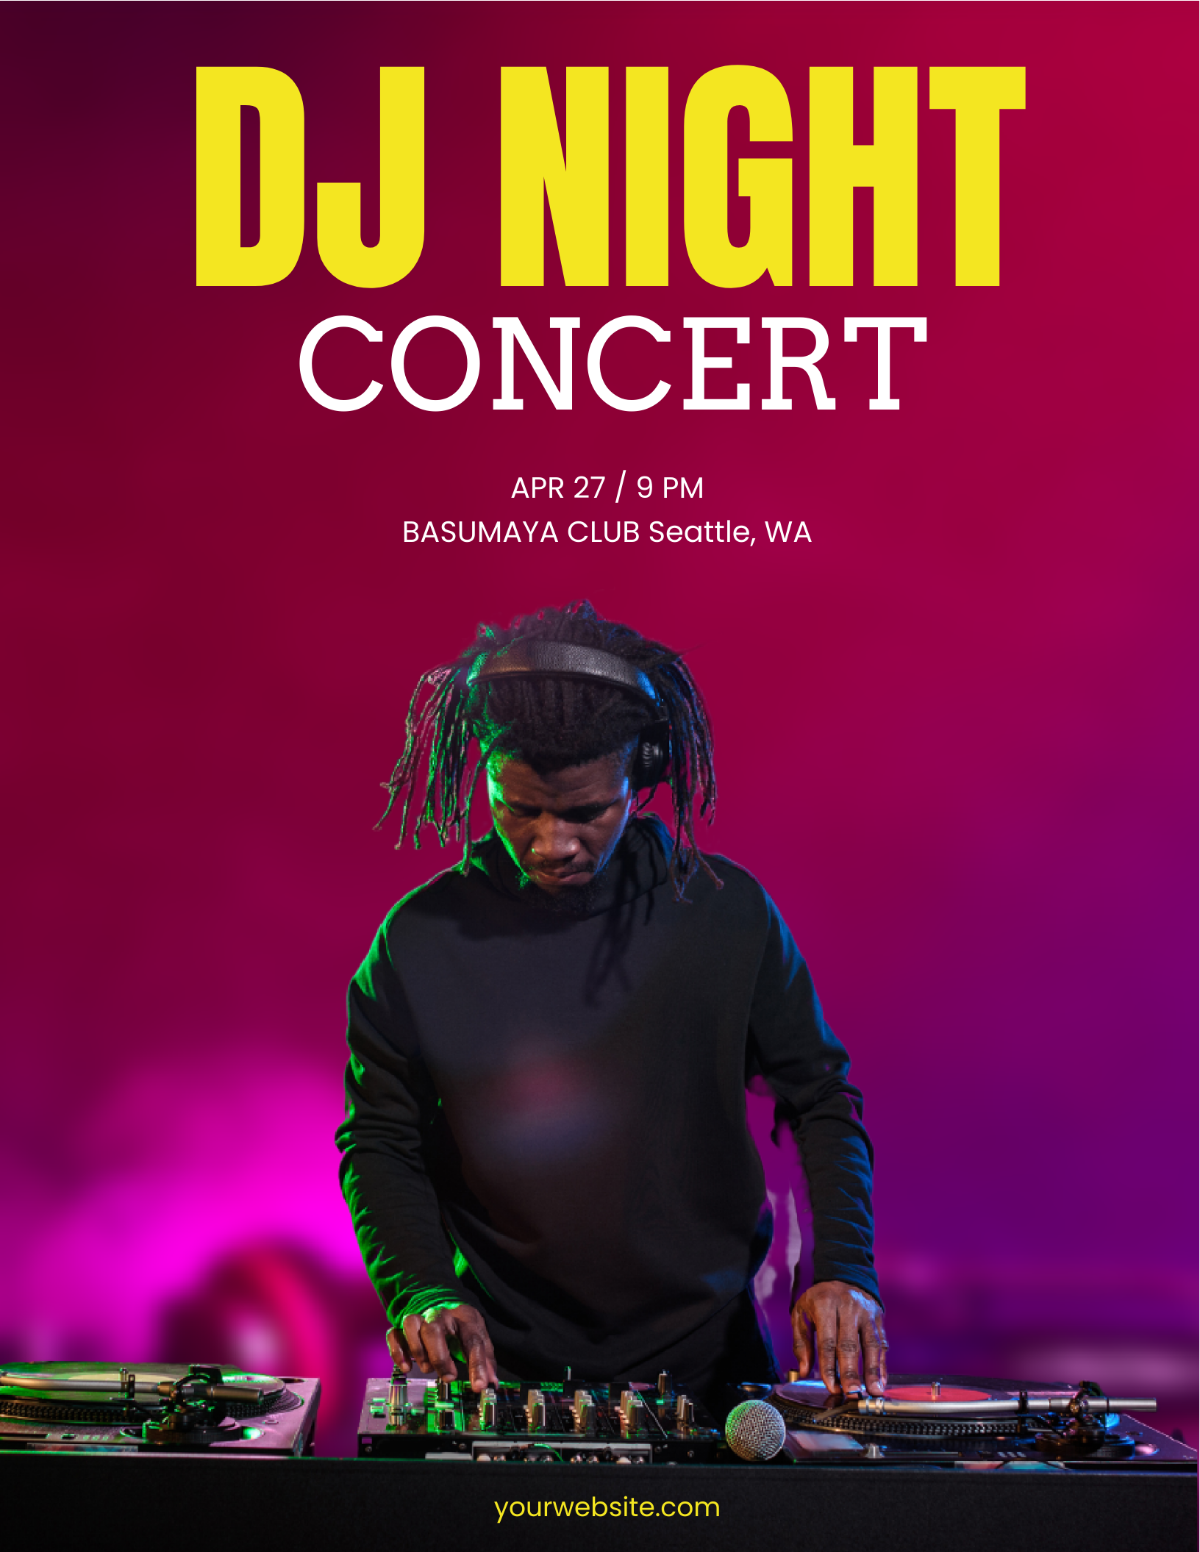 DJ Night Concert Flyer